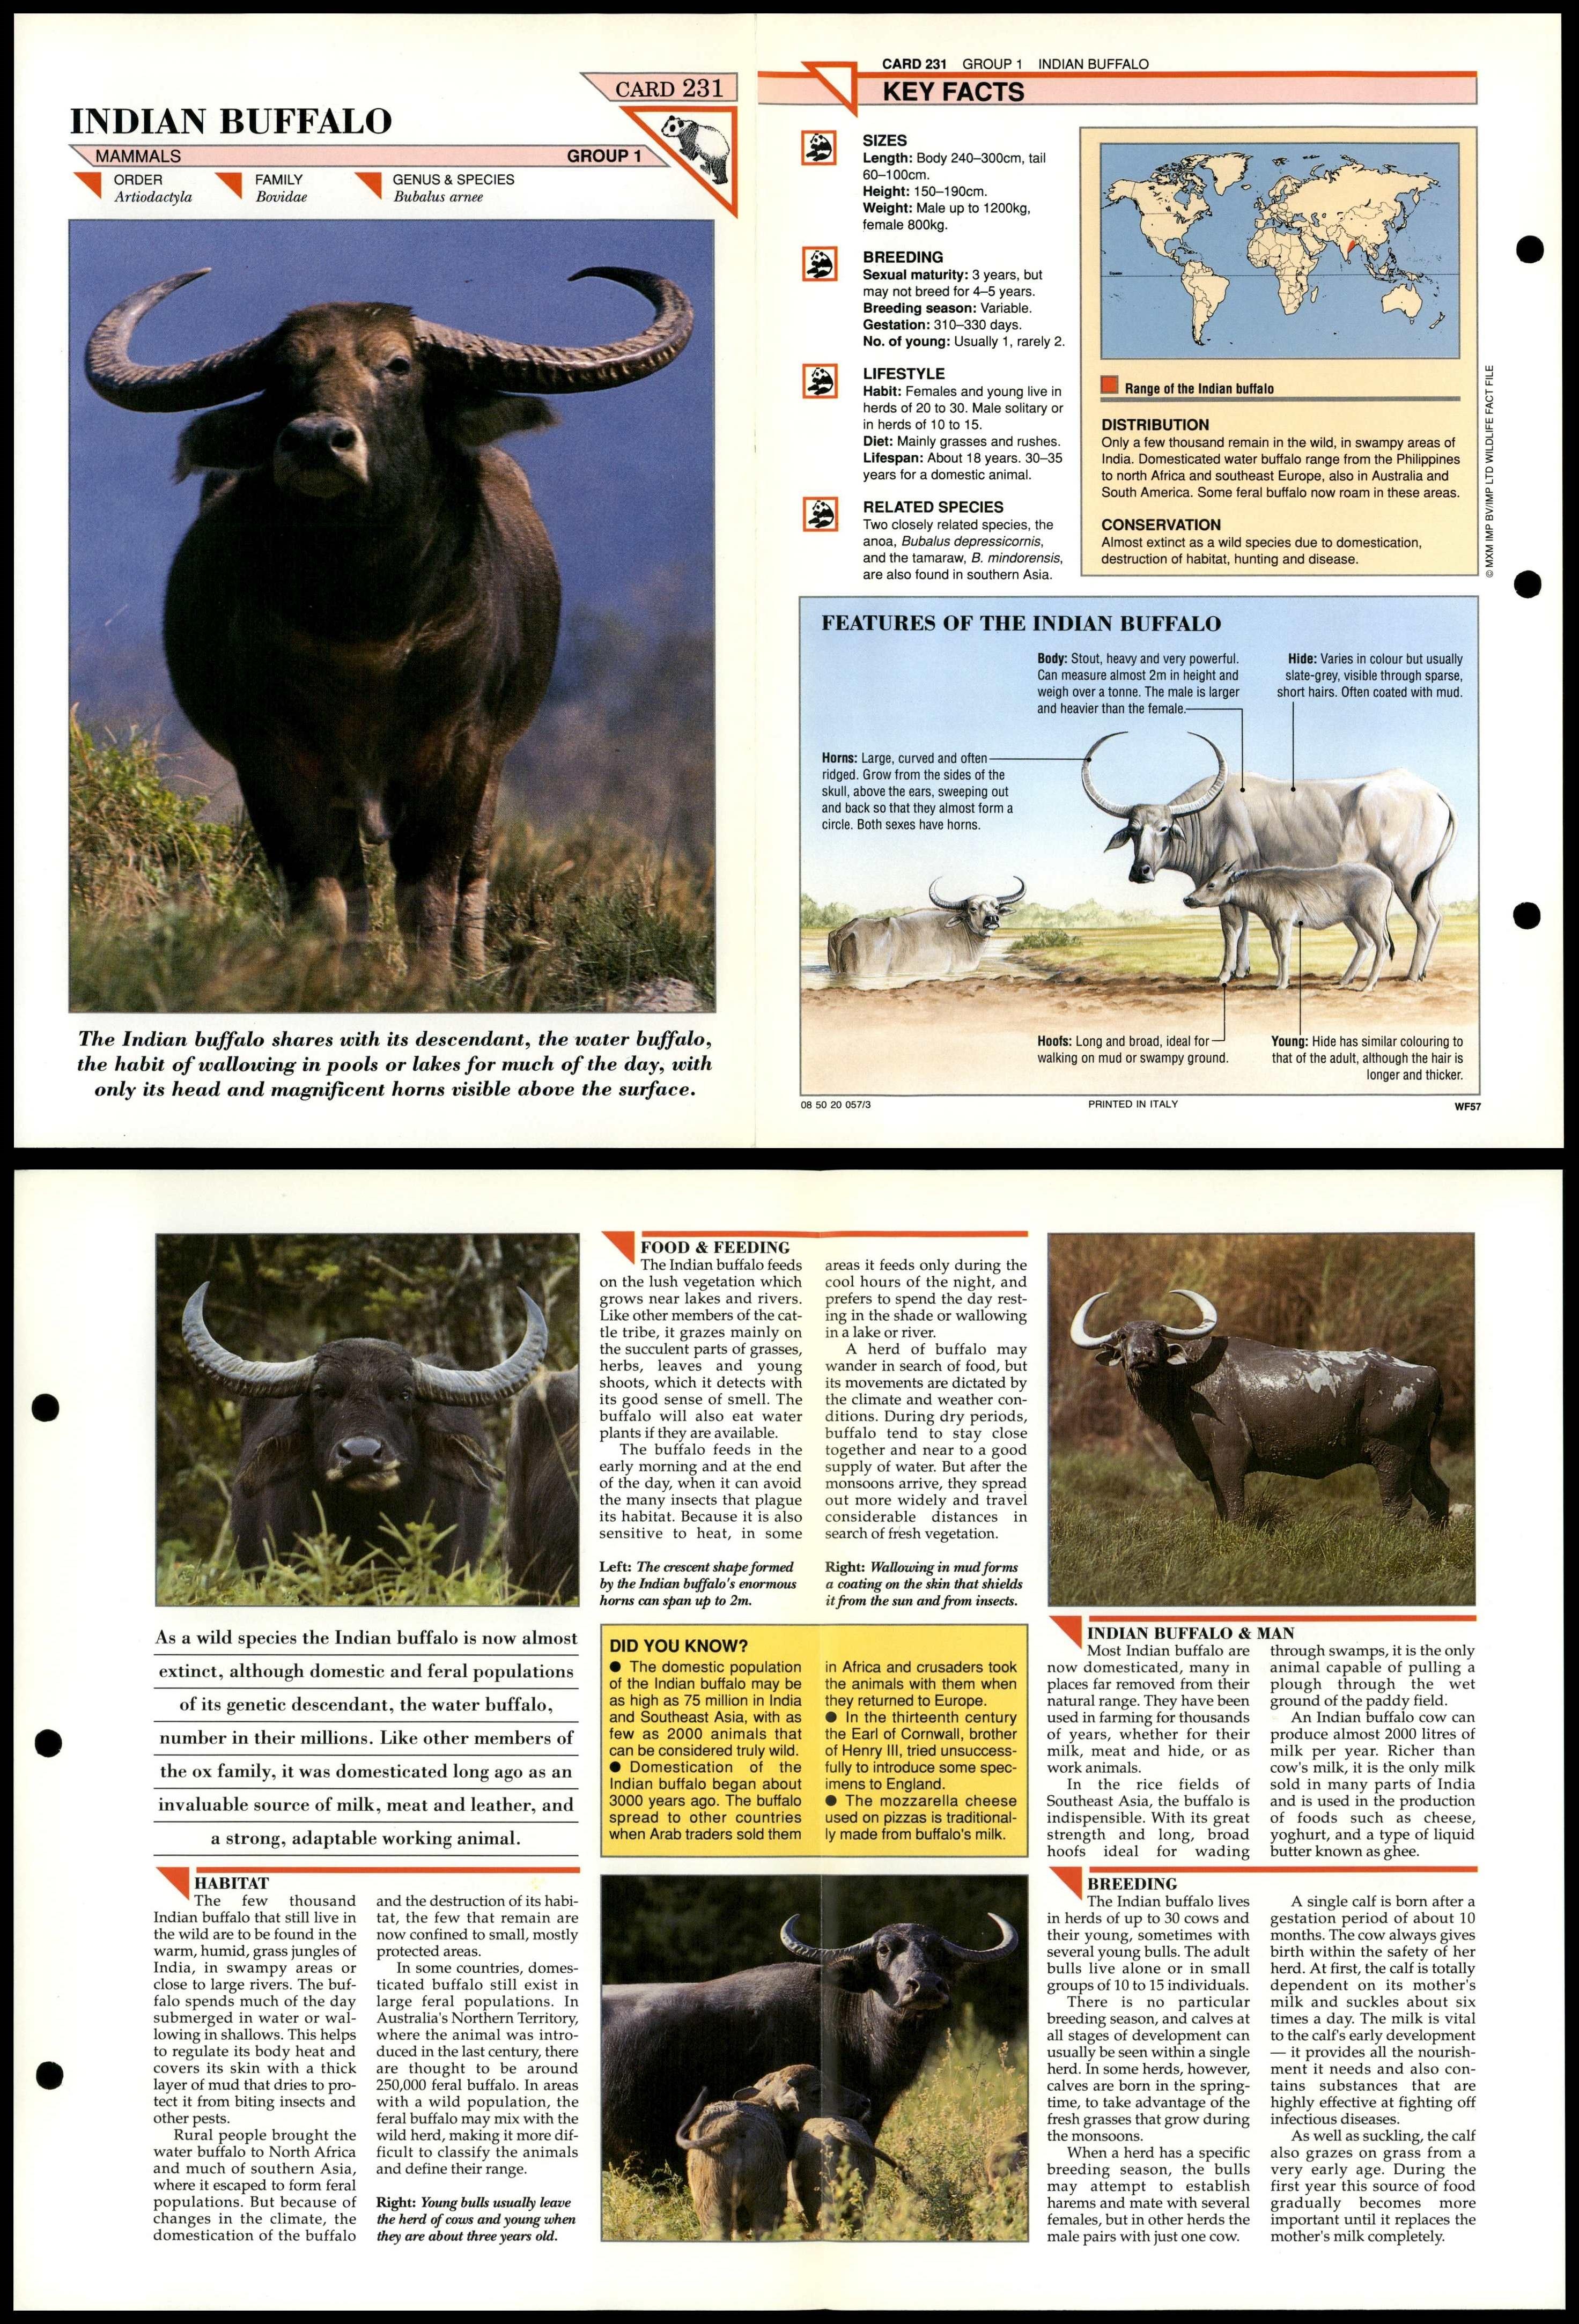 Indian Buffalo #231 Mammals Wildlife Fact File Fold-Out Card